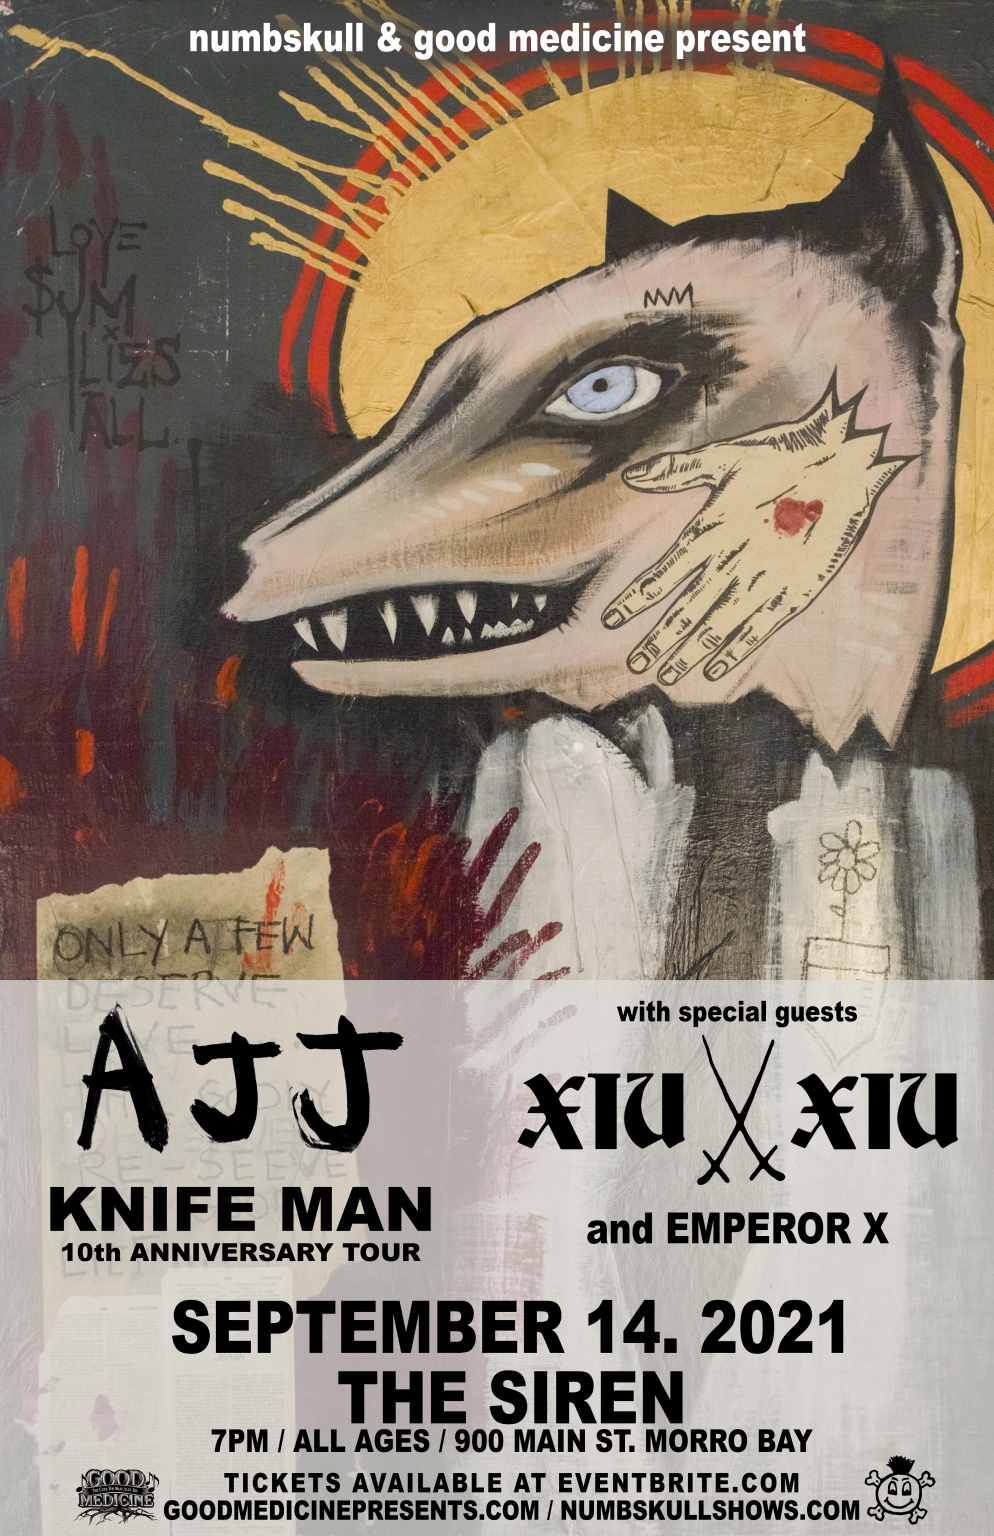 AJJ Knife Man 10th Anniversary Tour w/Xiu Xiu, Emperor X The Siren